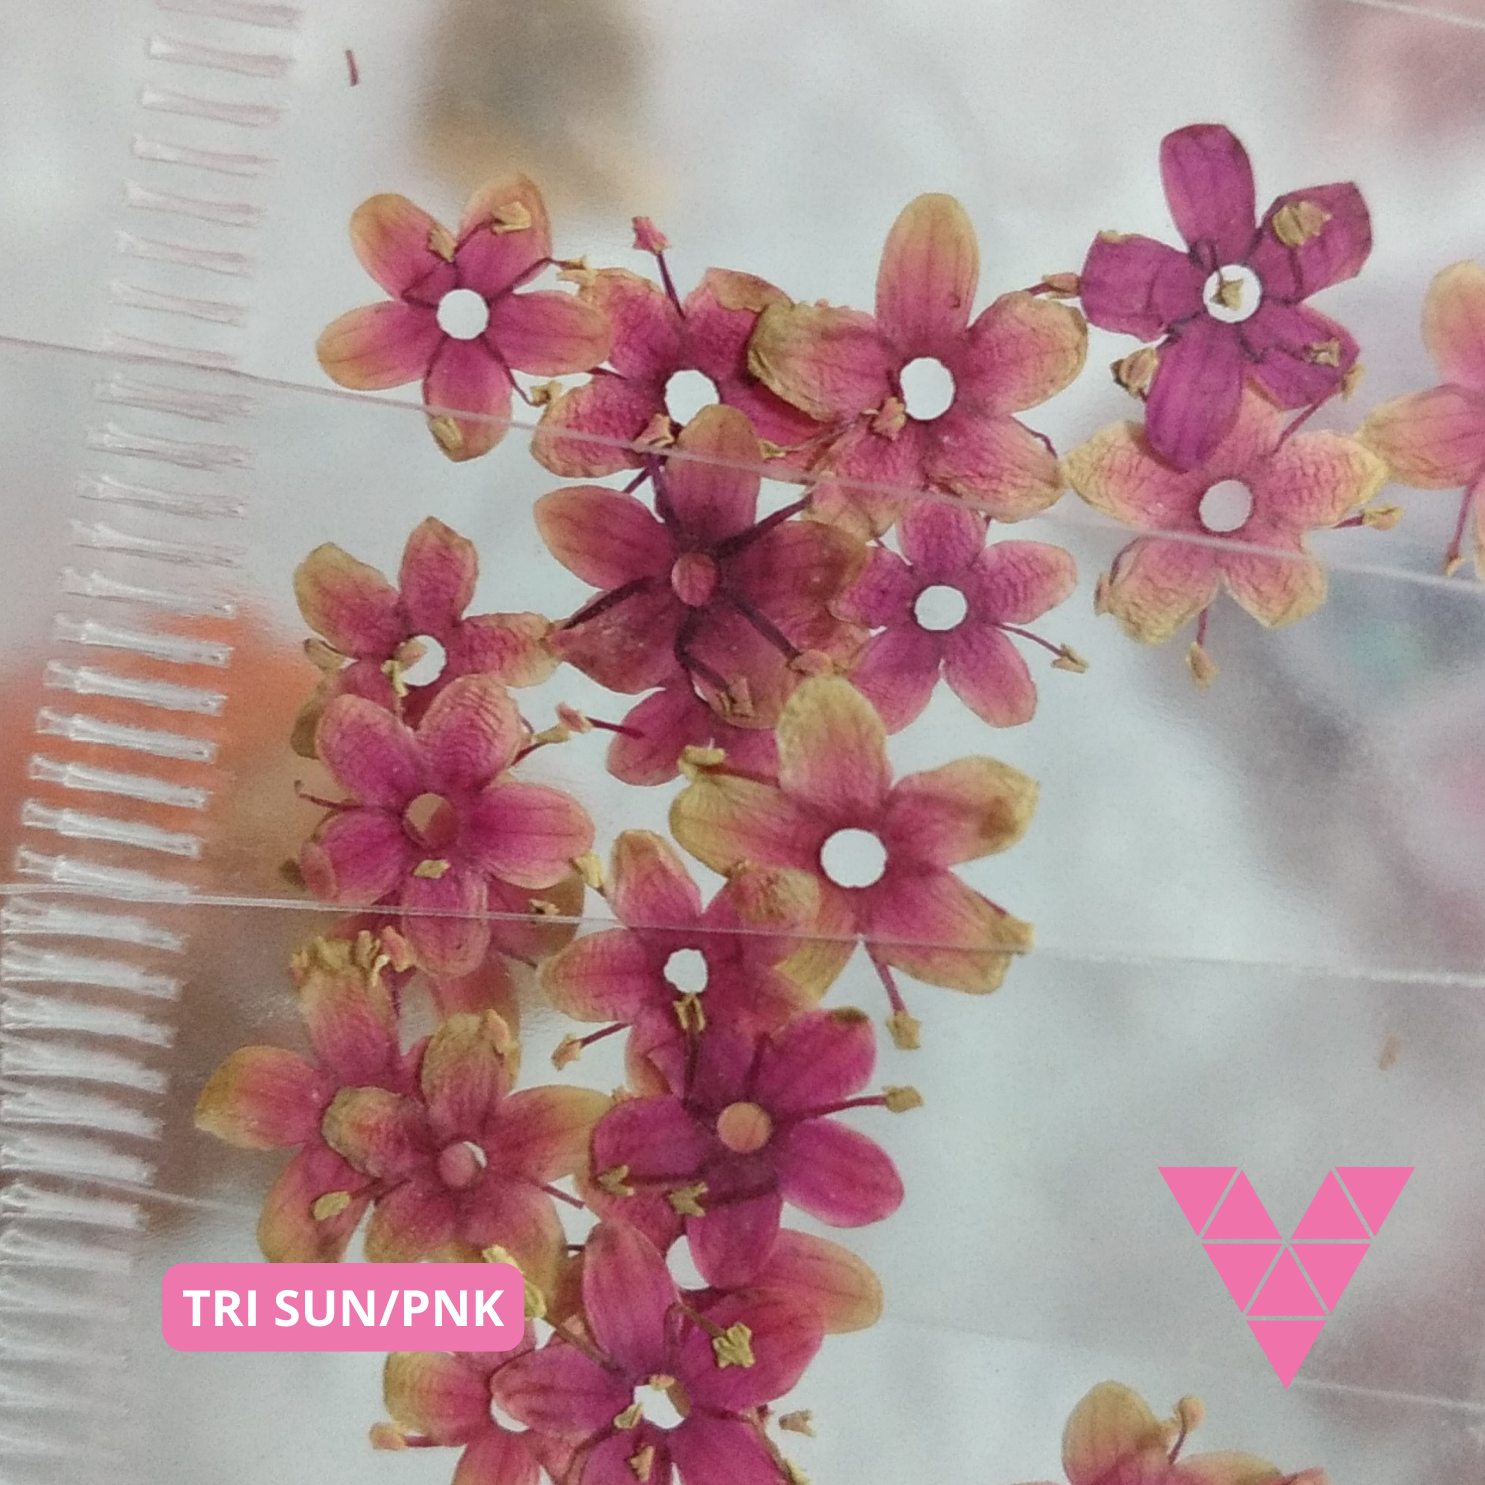 Tri Sun/Pnk Dried Flowers